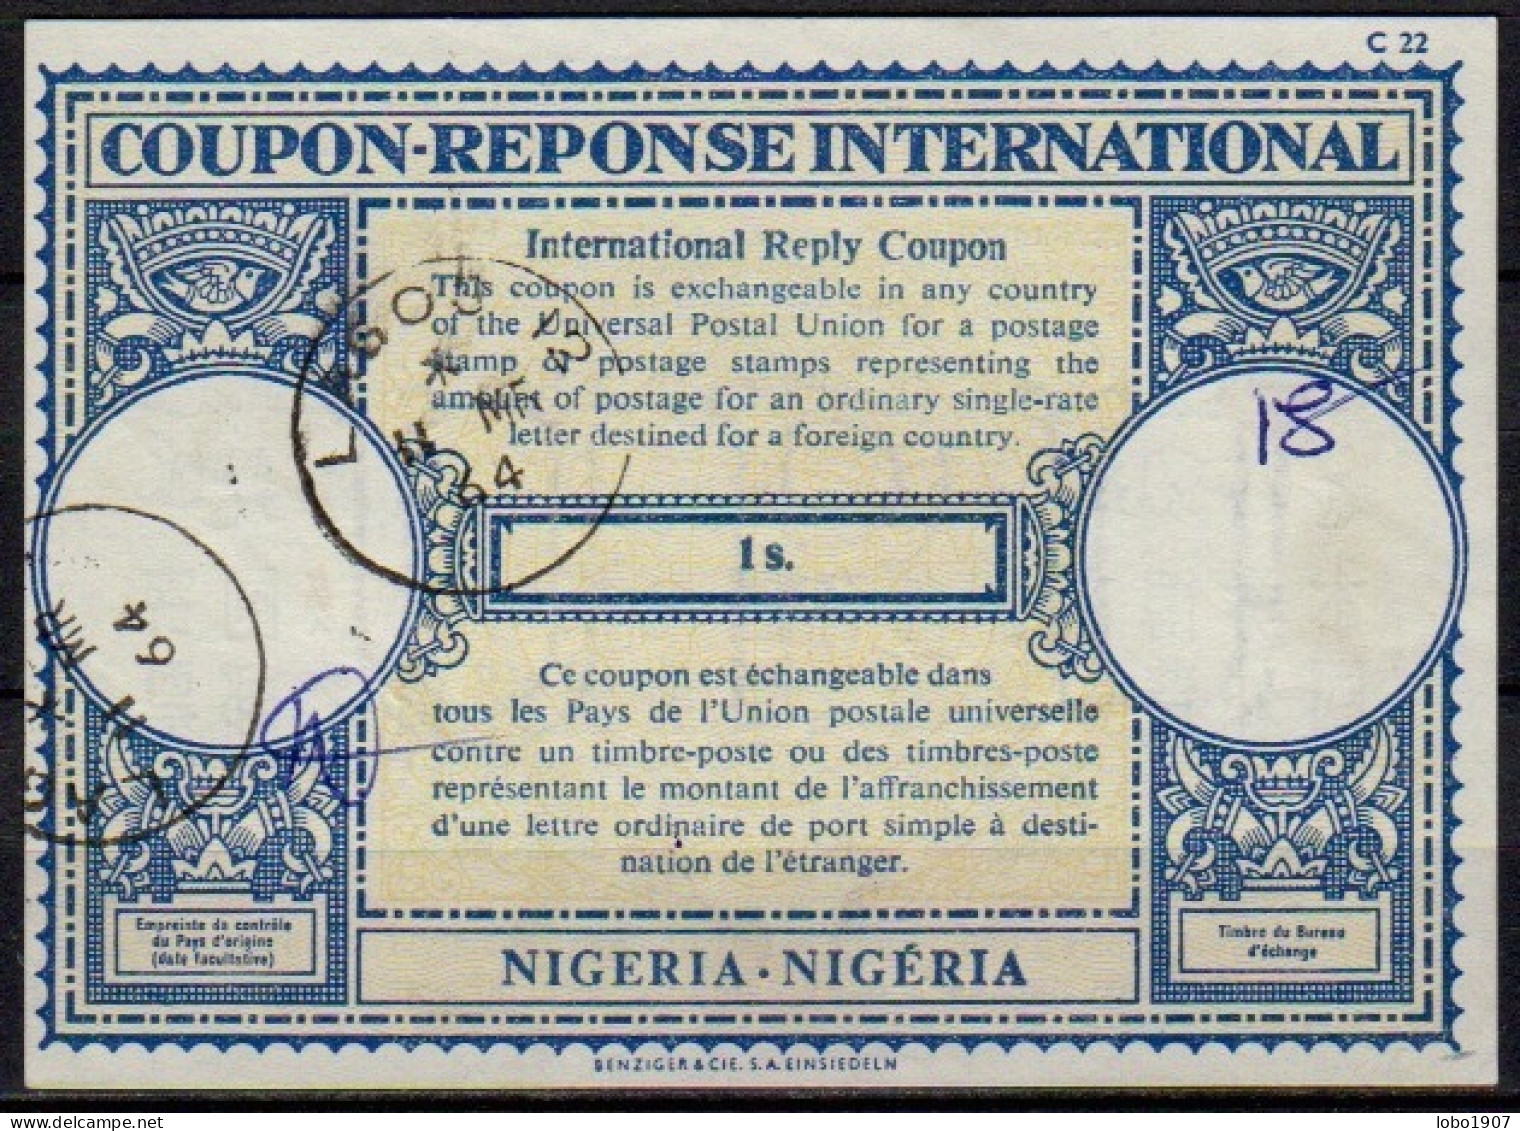 NIGERIA  Lo17 1s.  International Reply Coupon Reponse Antwortschein IRC IAS Cupon Respuesta  O LAGOS 11.03.64 - Nigeria (1961-...)